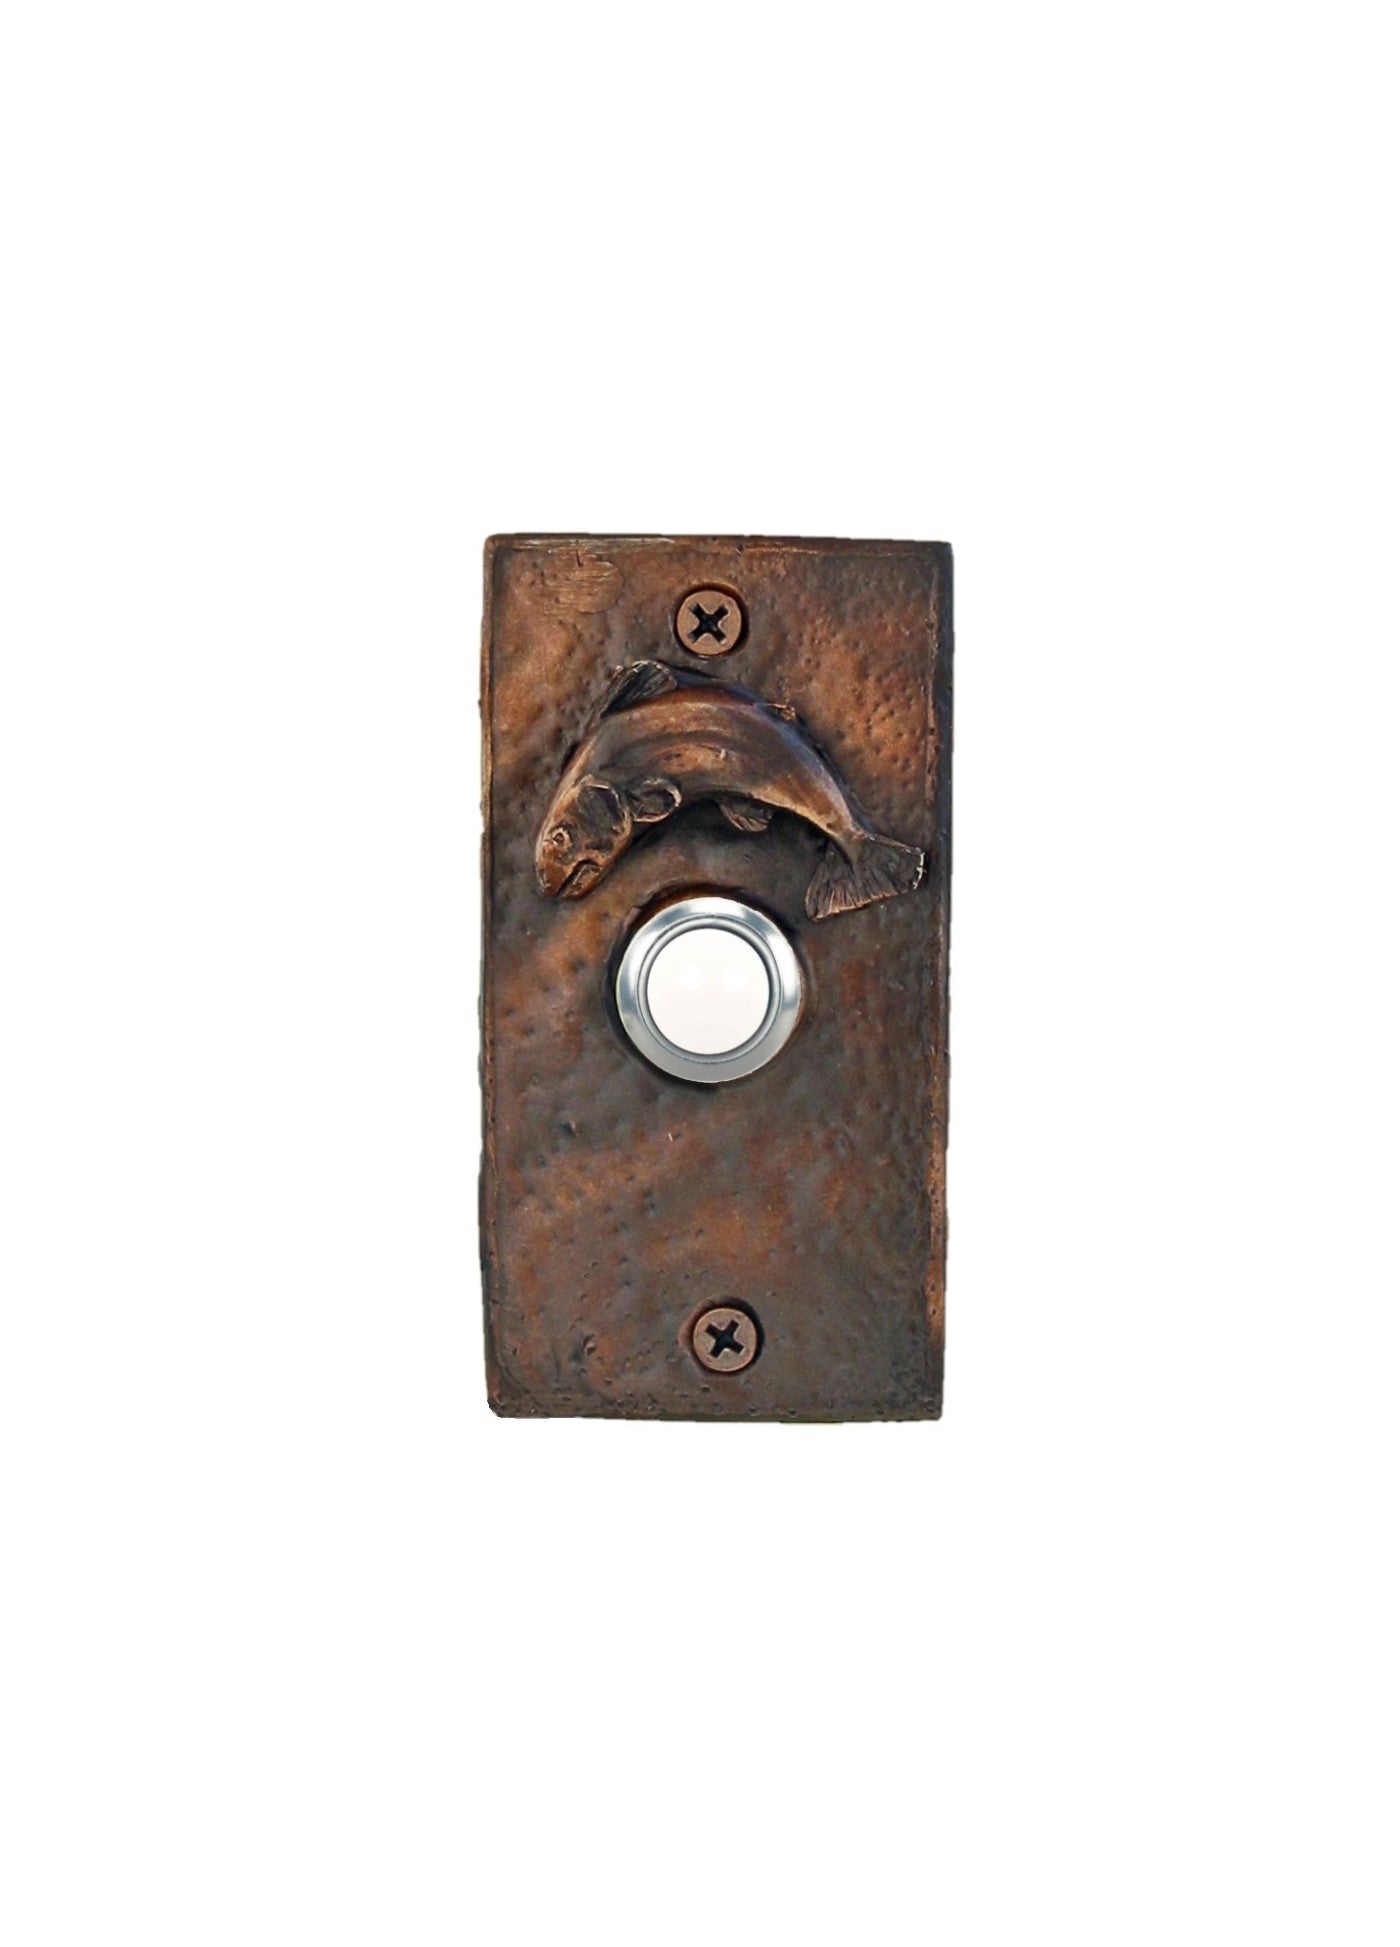 Rustic Bronze Trout Doorbell - Rectangular shape, traditional patina